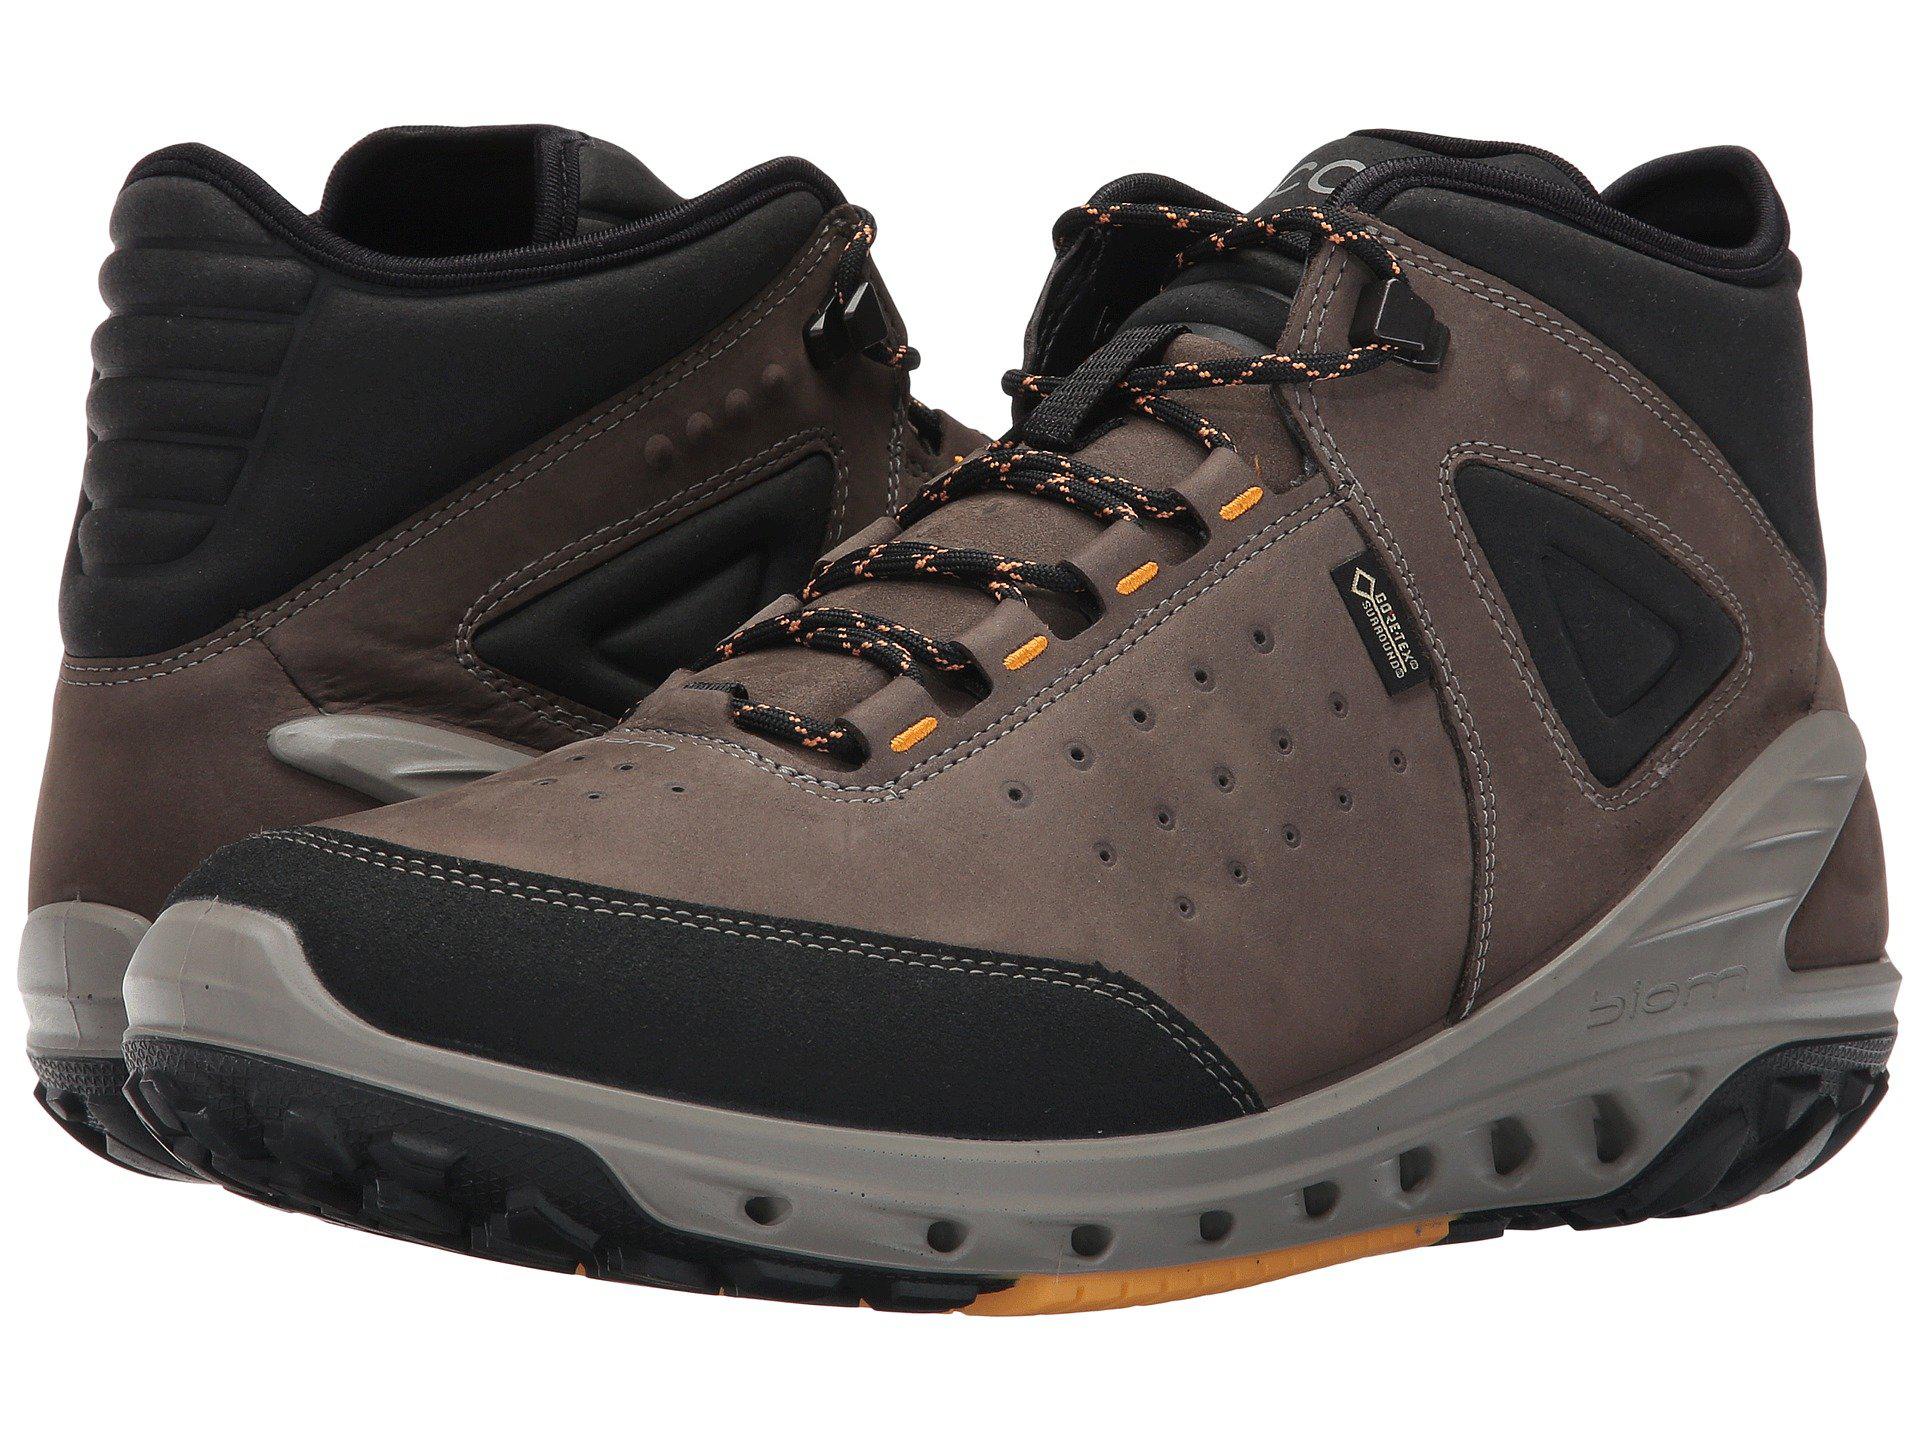 Ecco Leather Biom Venture Indoor Shoes in Black for Men - Lyst